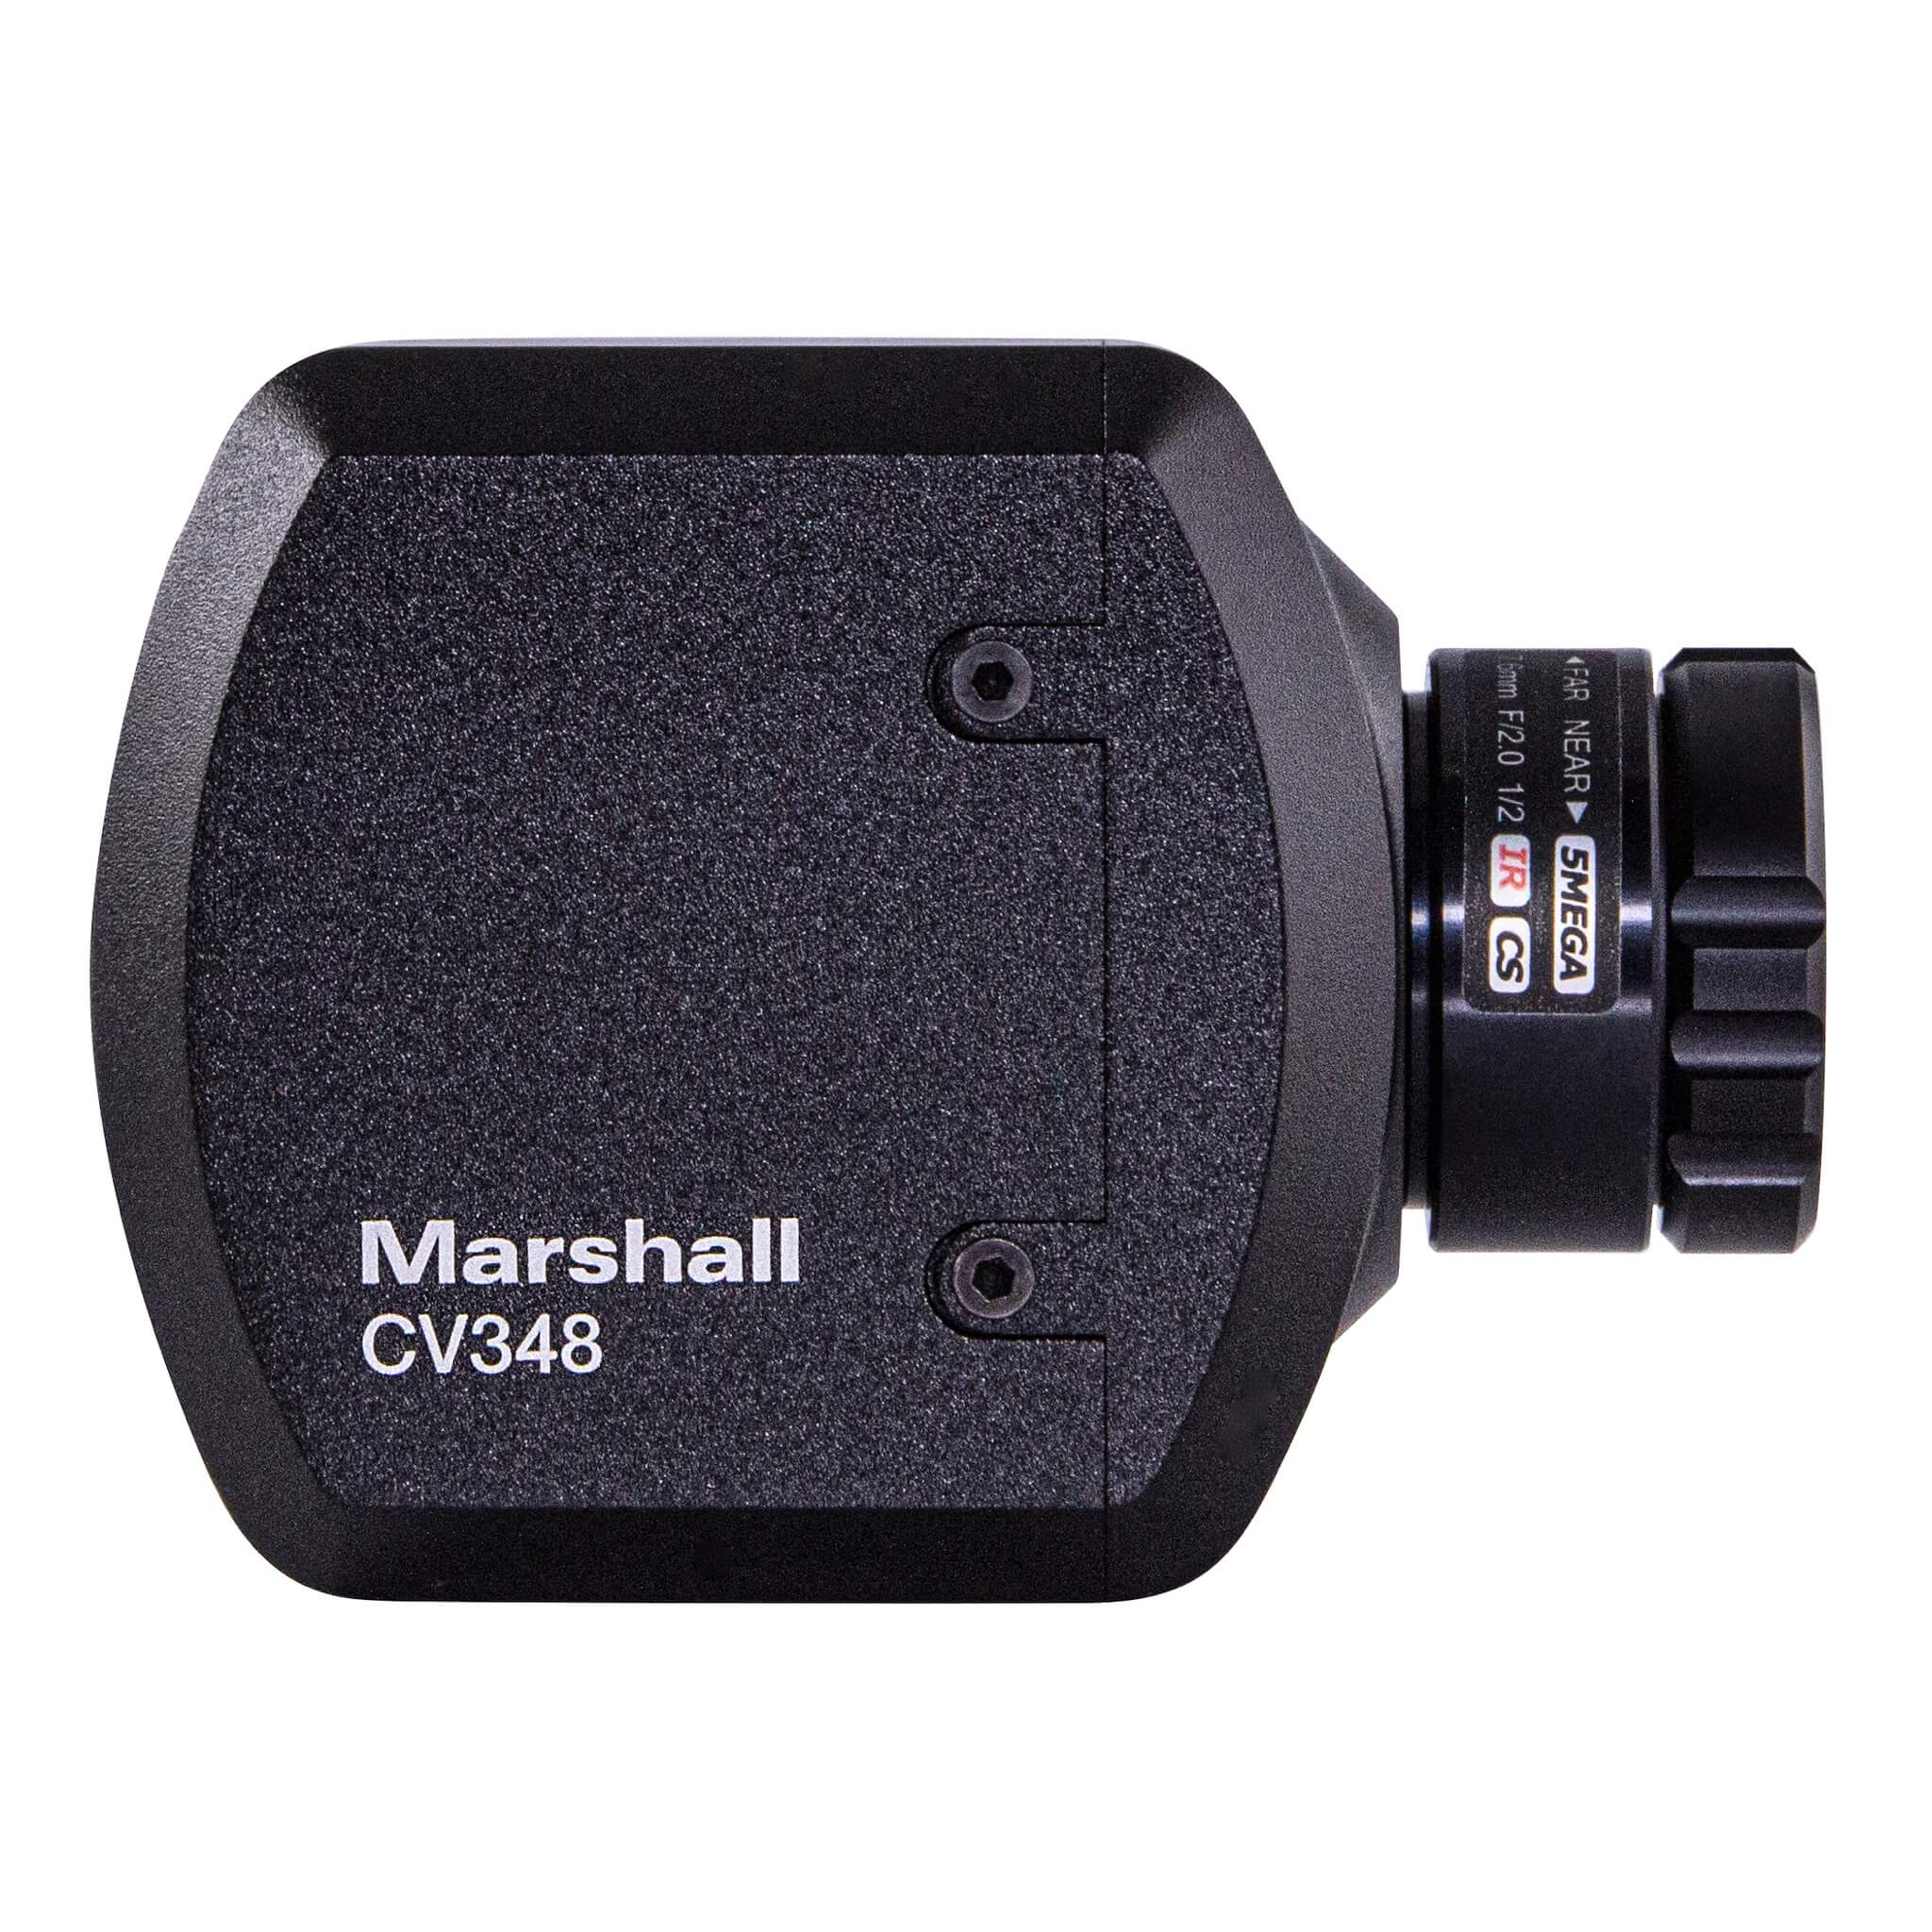 Marshall CV348 - Compact POV Camera 3G/HD-SDI, right side